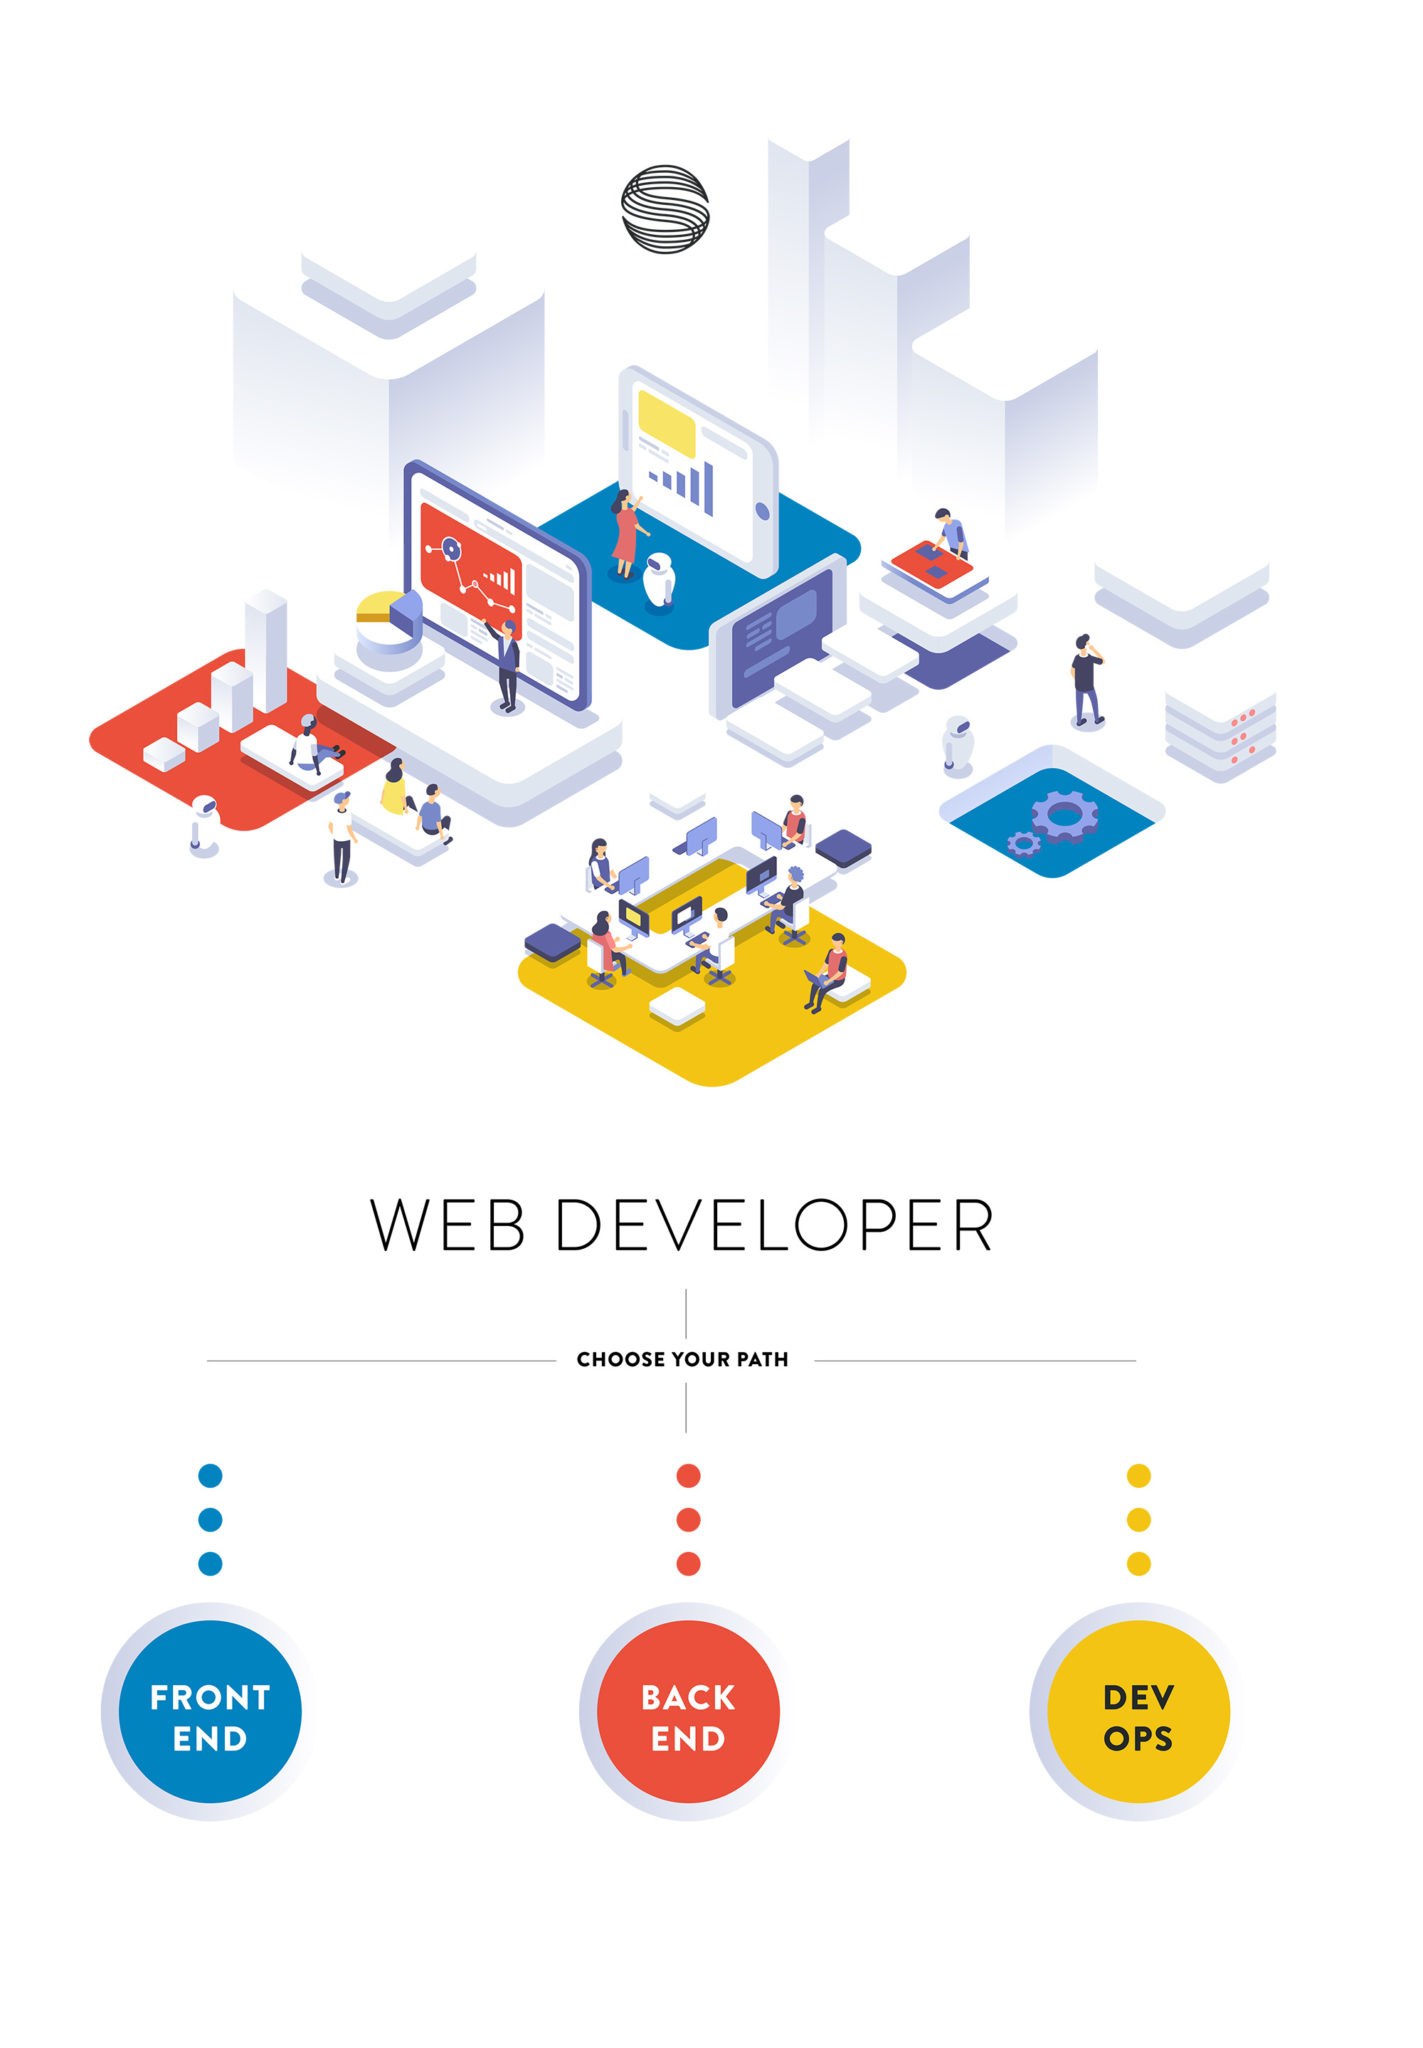 Web developer pathways